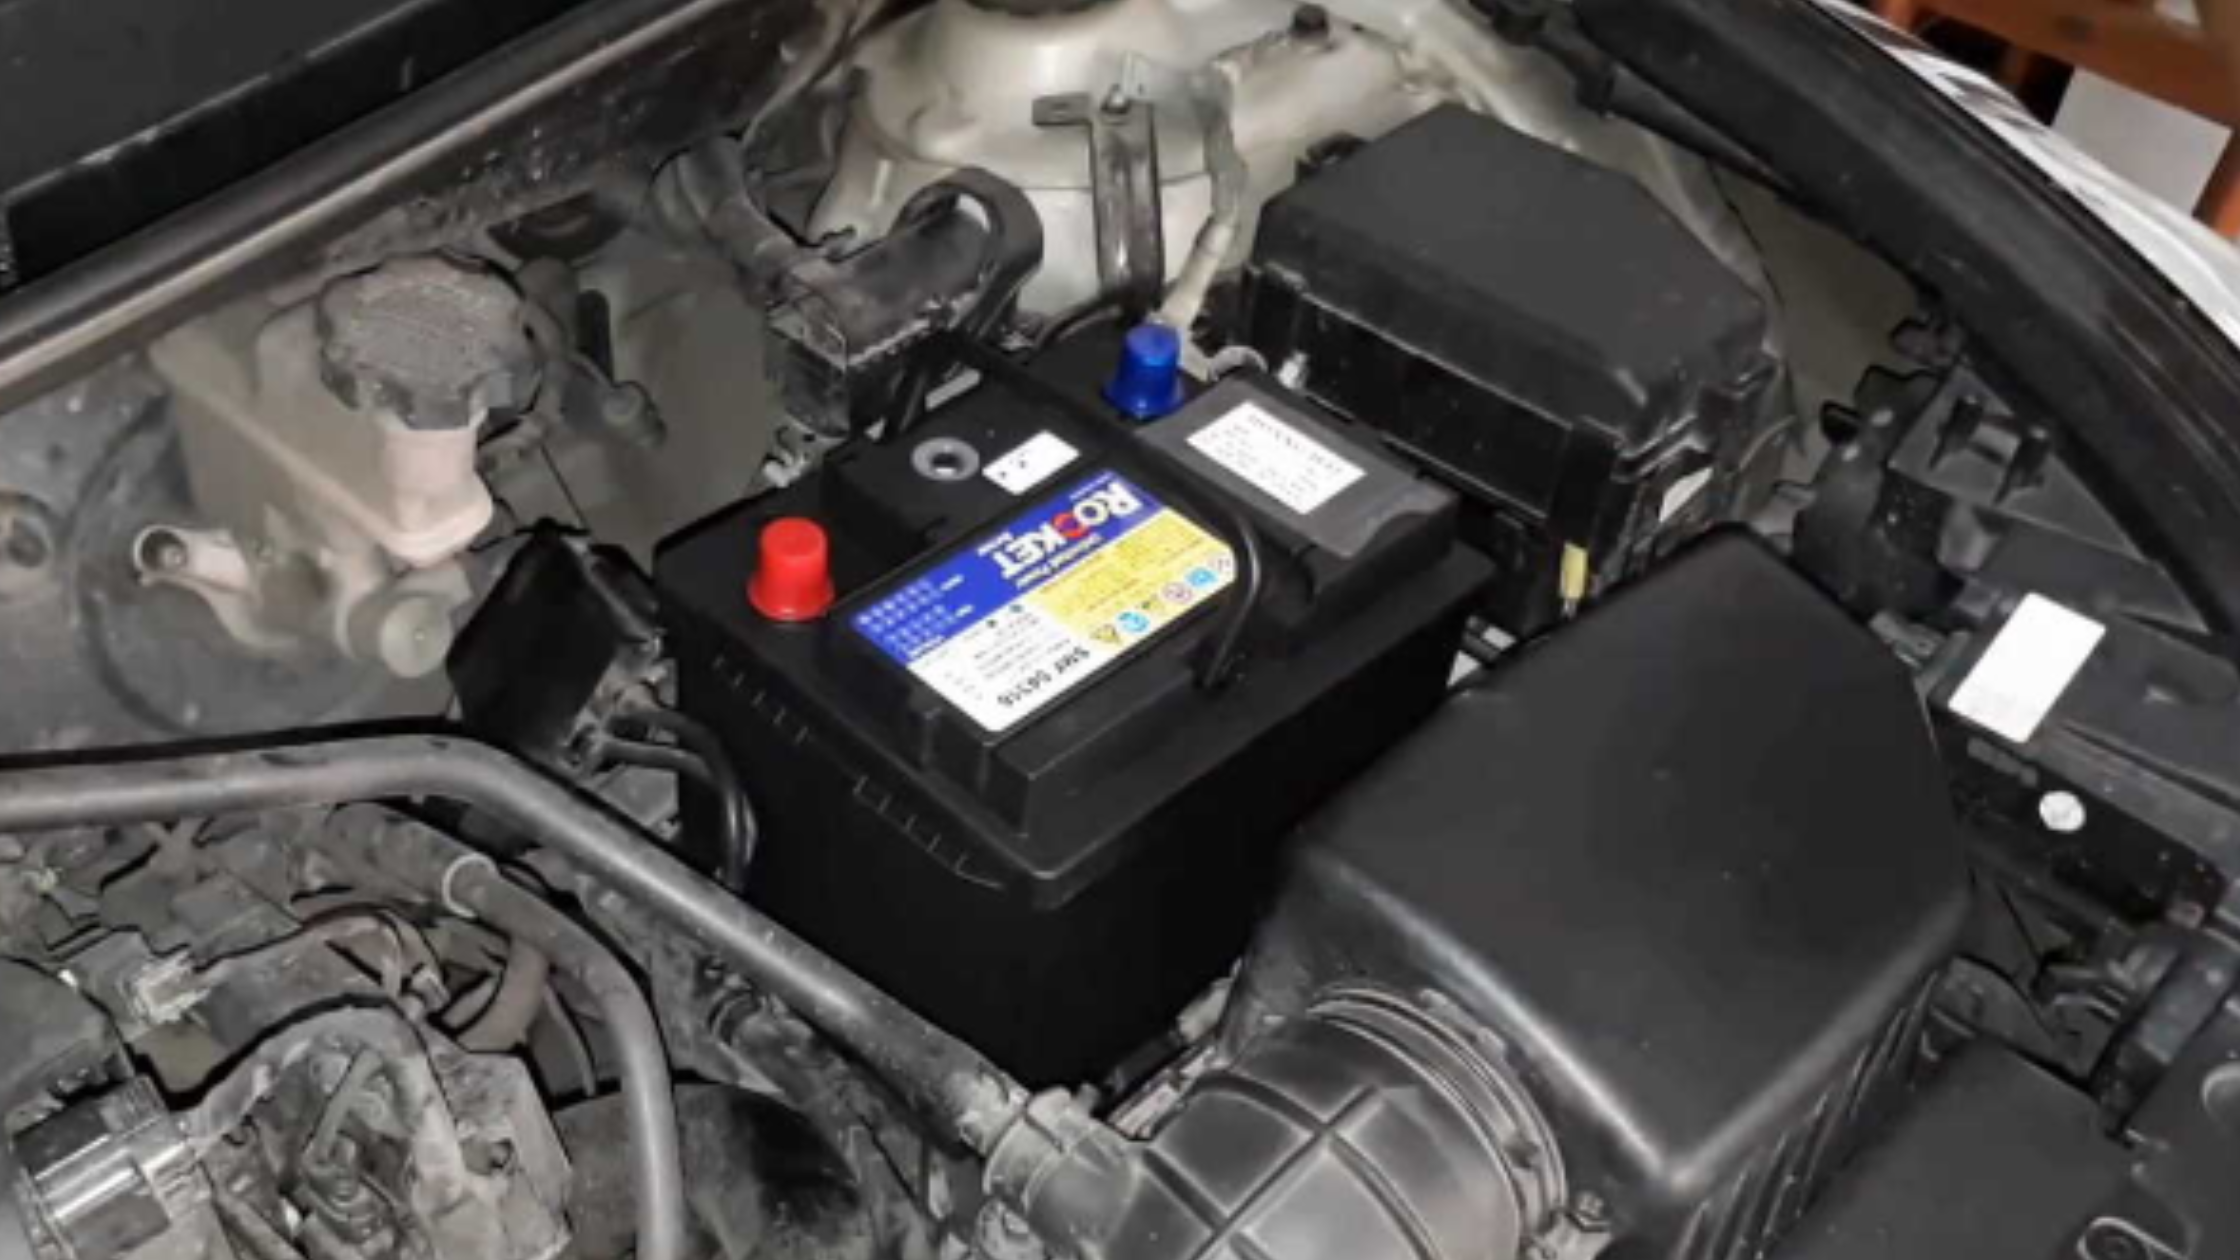 Hyundai Sonata Battery Discharge Warning